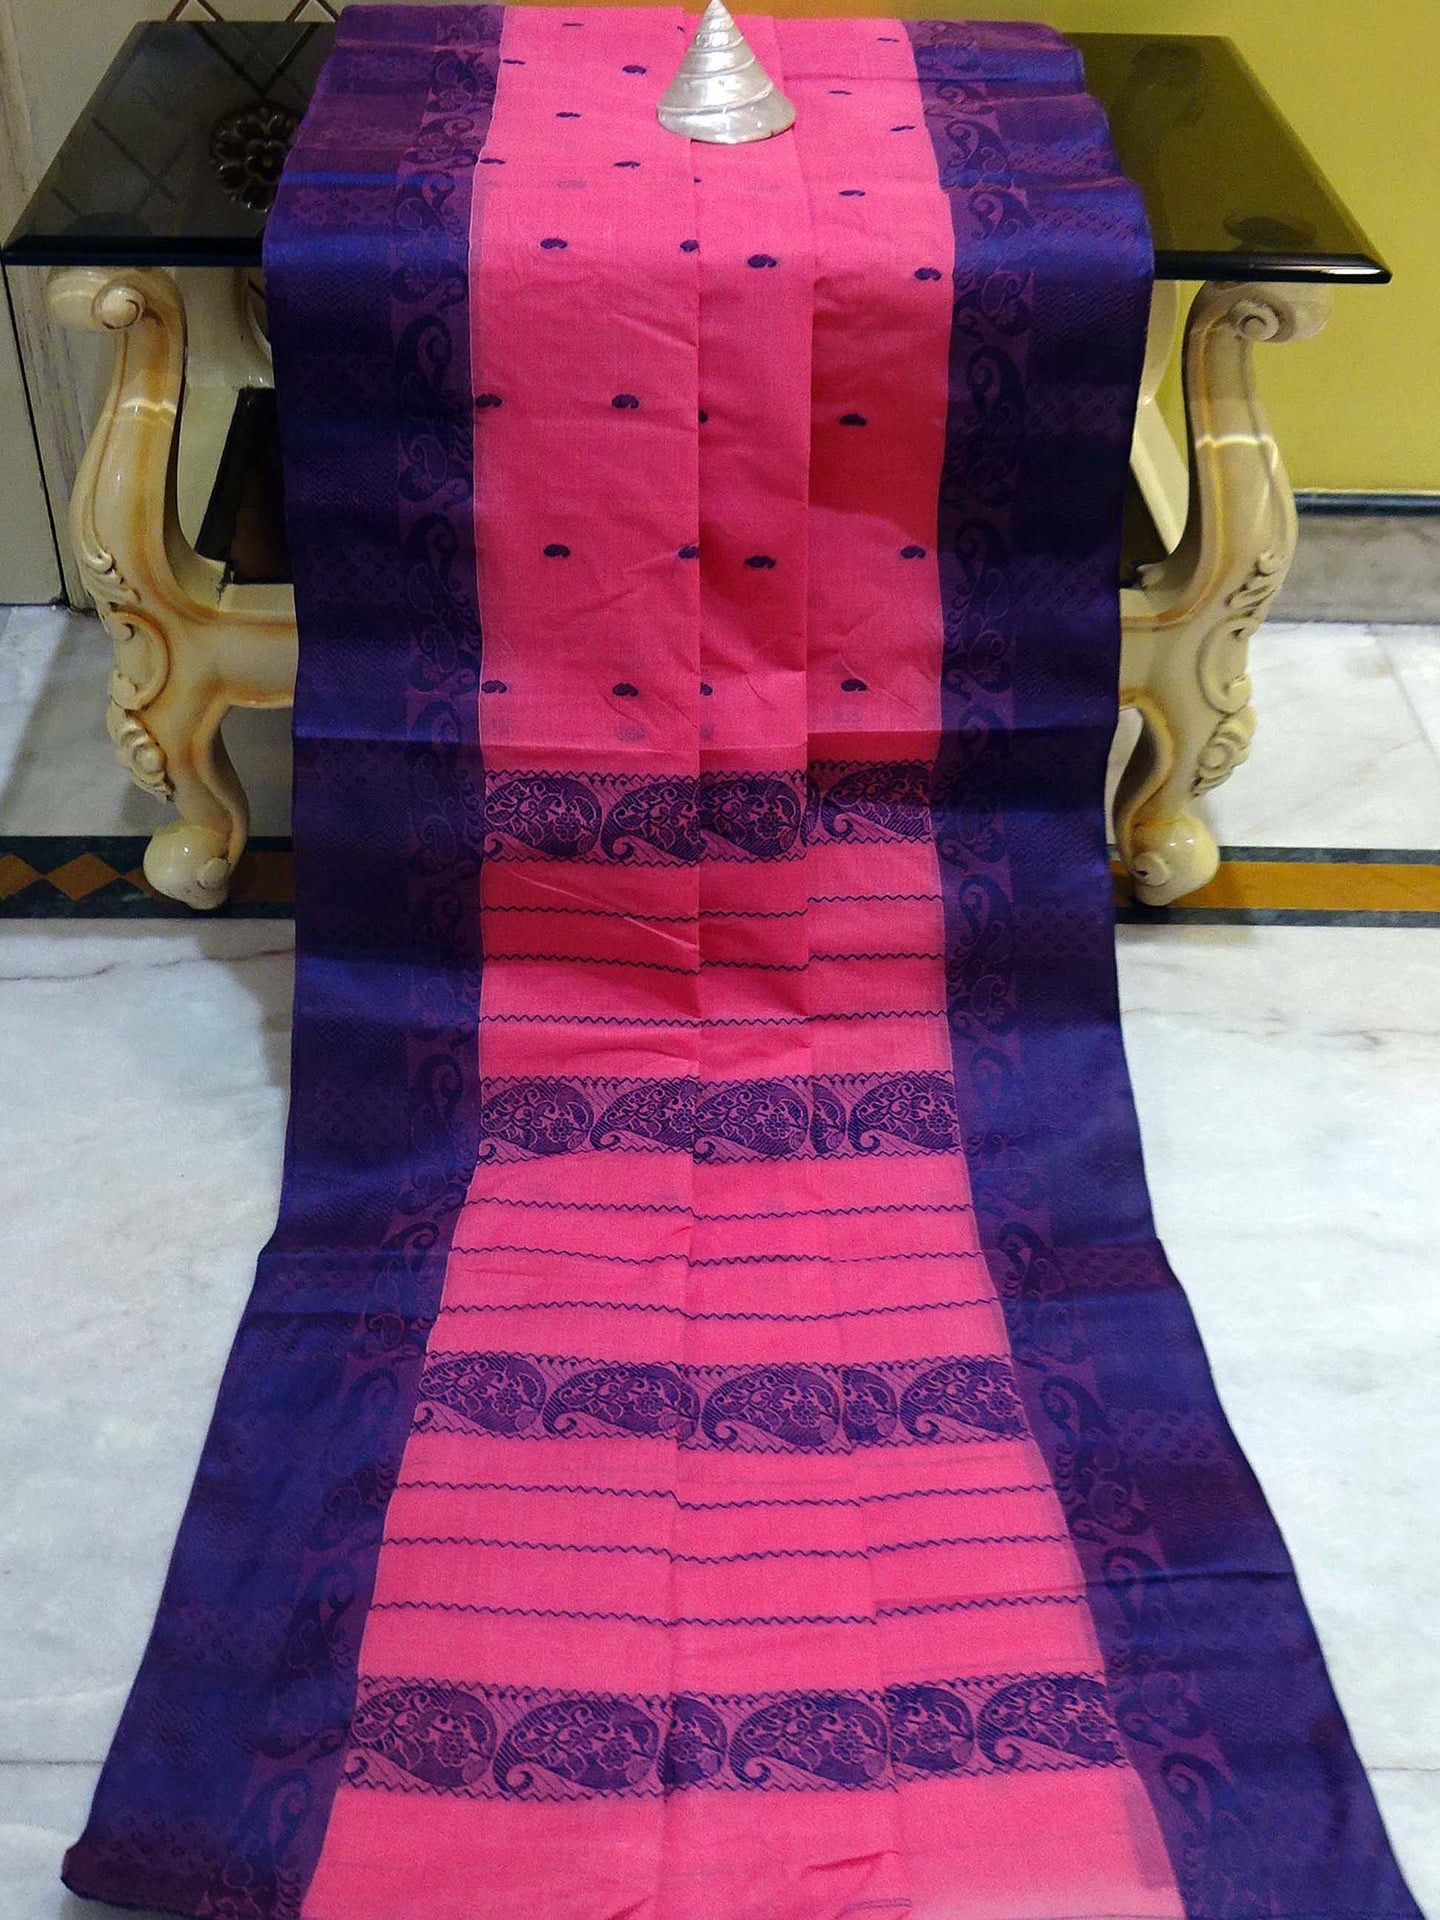 Resham Thread Work Tangail Handloom Cotton Saree in Watermelon Pink and Deep Blue